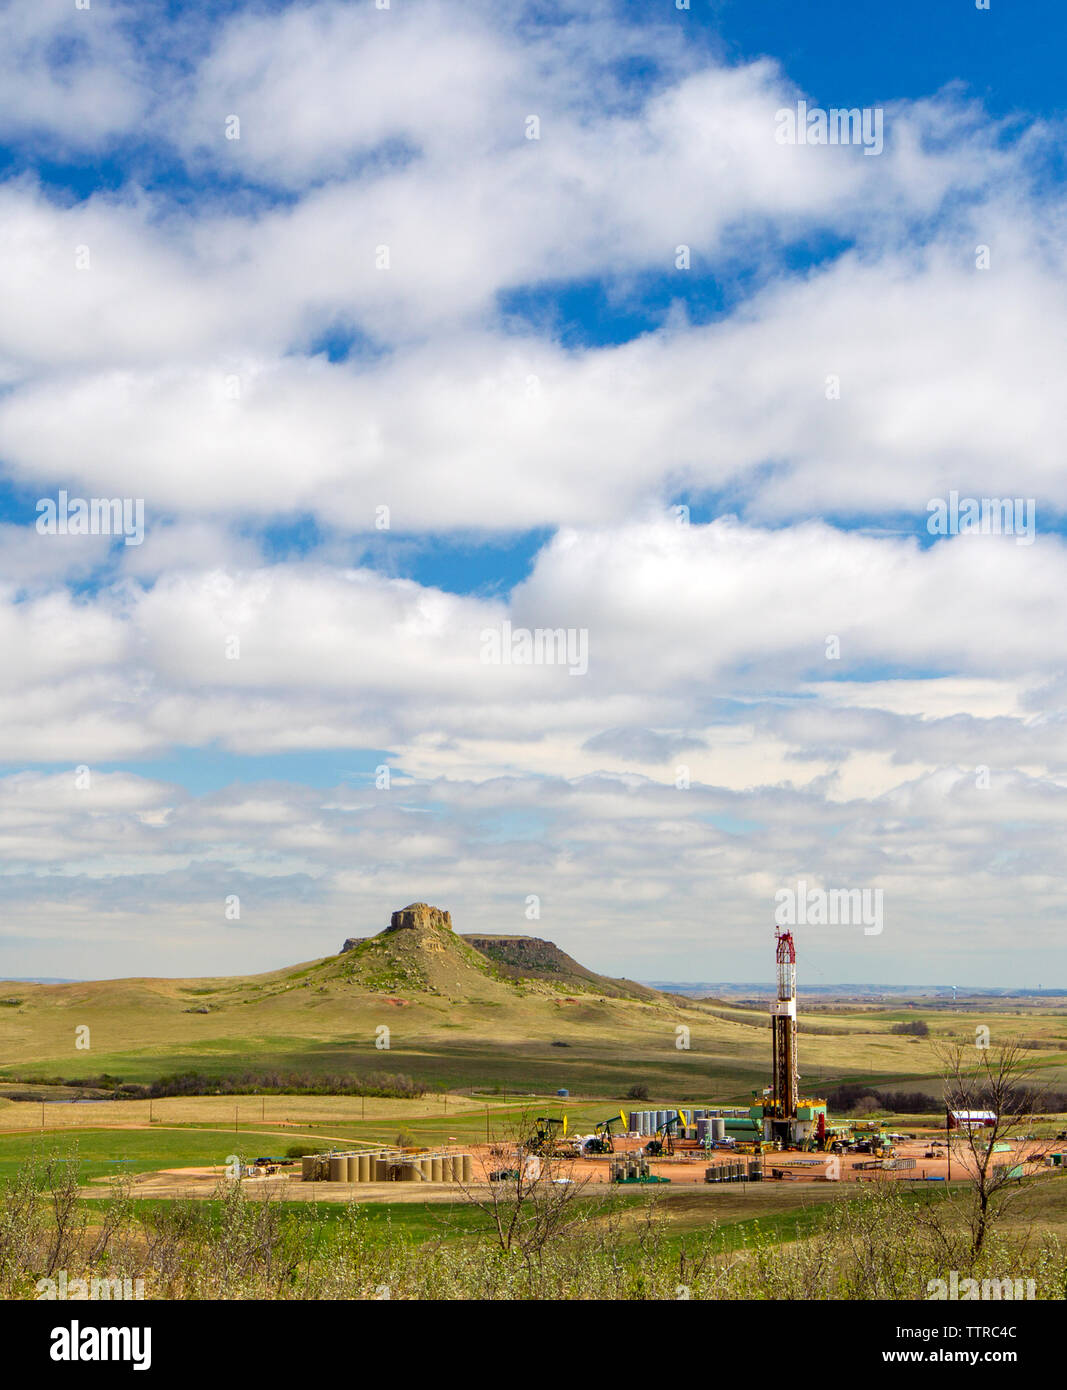 Die Ölproduktion Plattform auf Feld gegen bewölkter Himmel Stockfoto